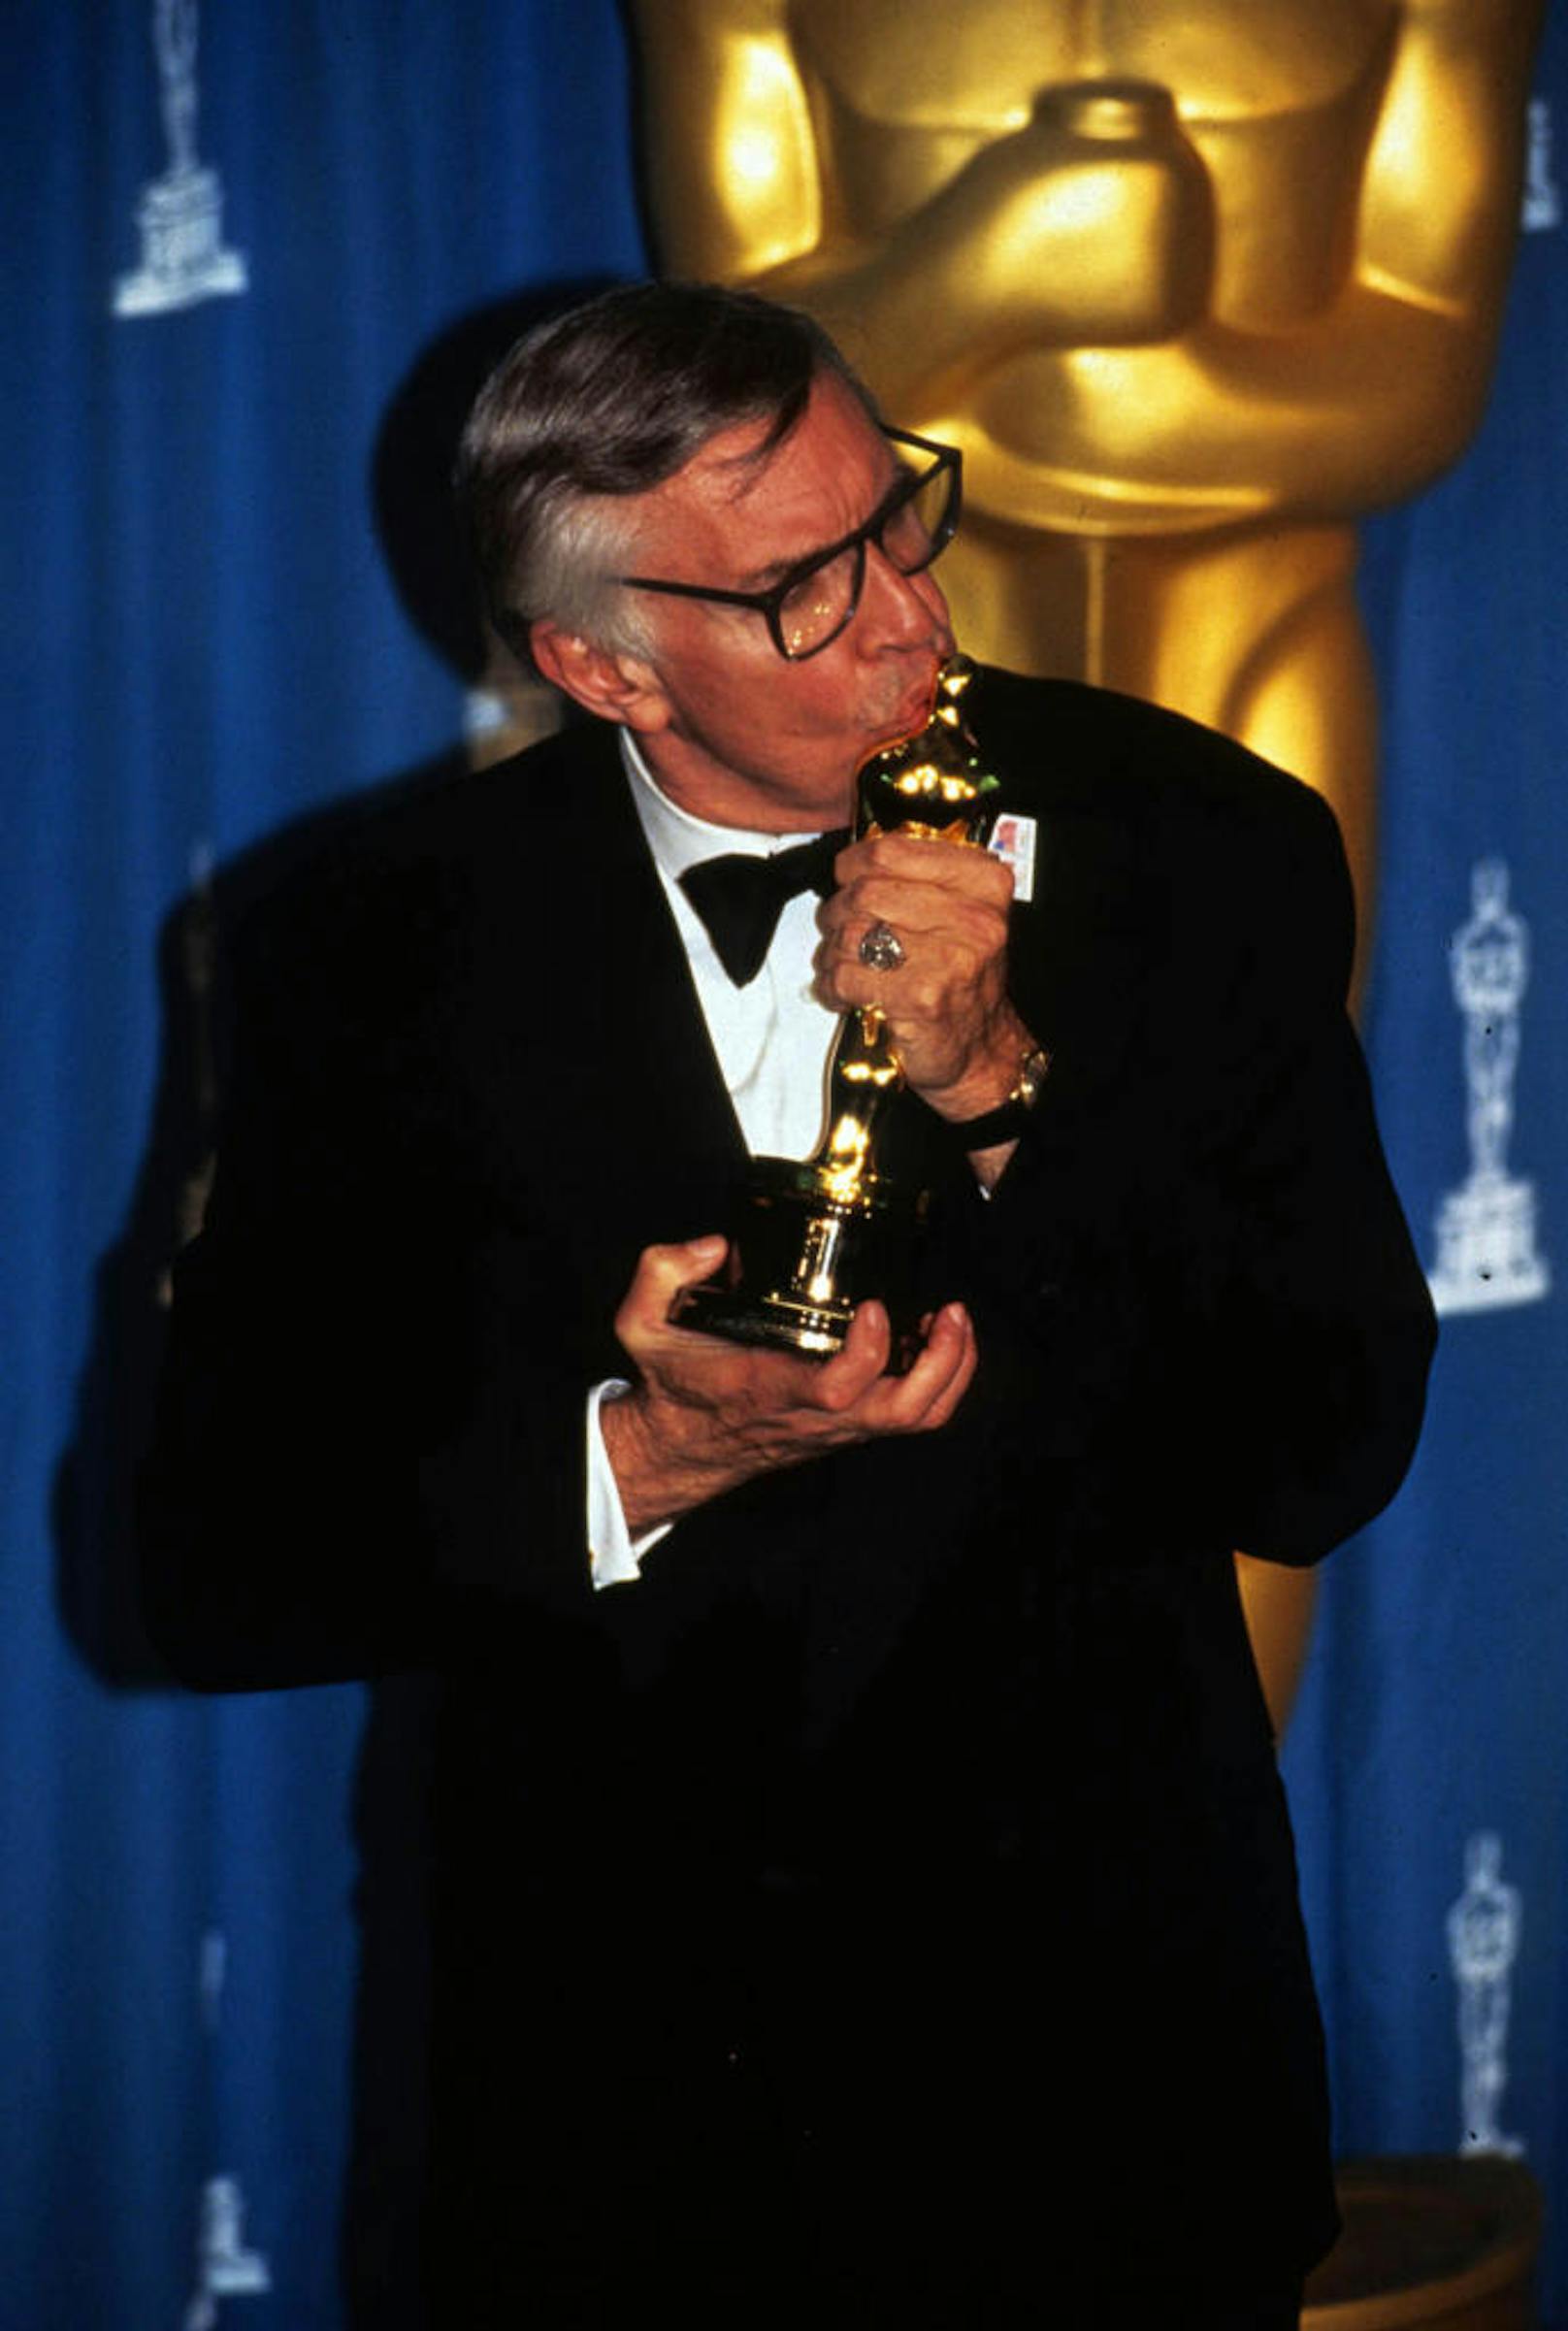 Martin LANDAU erhielt 1995 einen Oscar als bester Nebendarsteller in "Ed Wood".